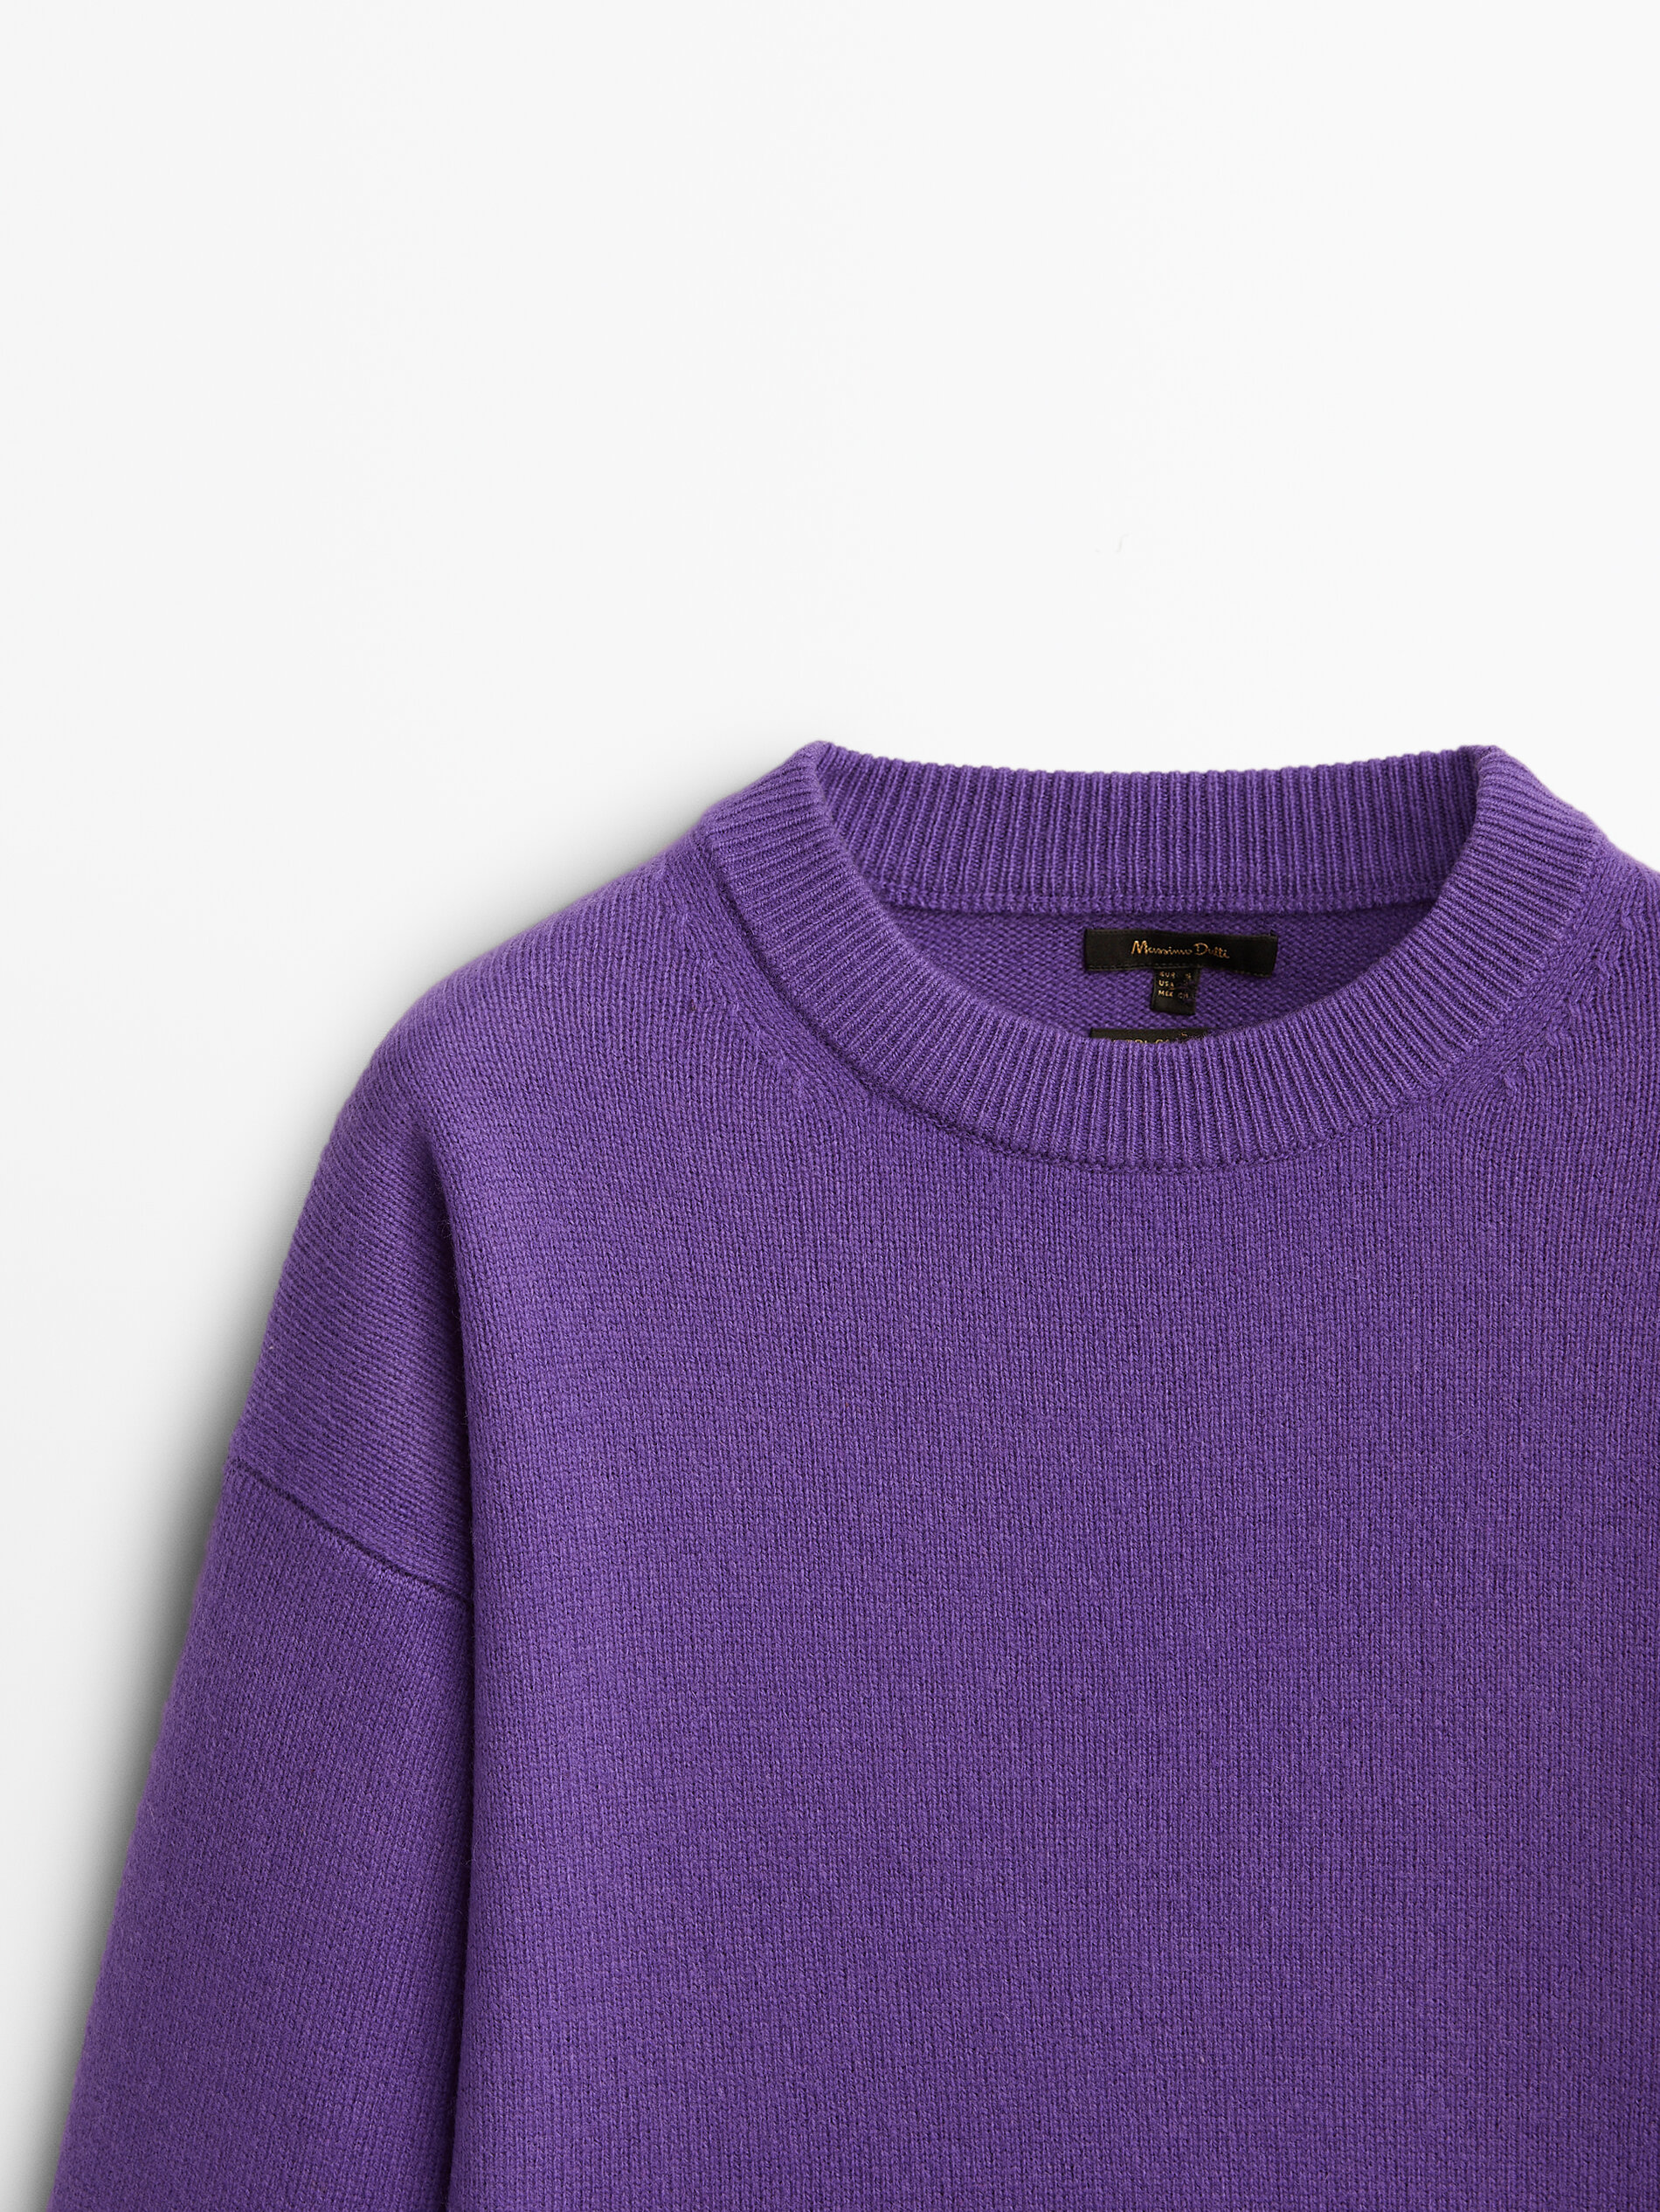 Cashmere wool cape sweater - Massimo Dutti United Kingdom